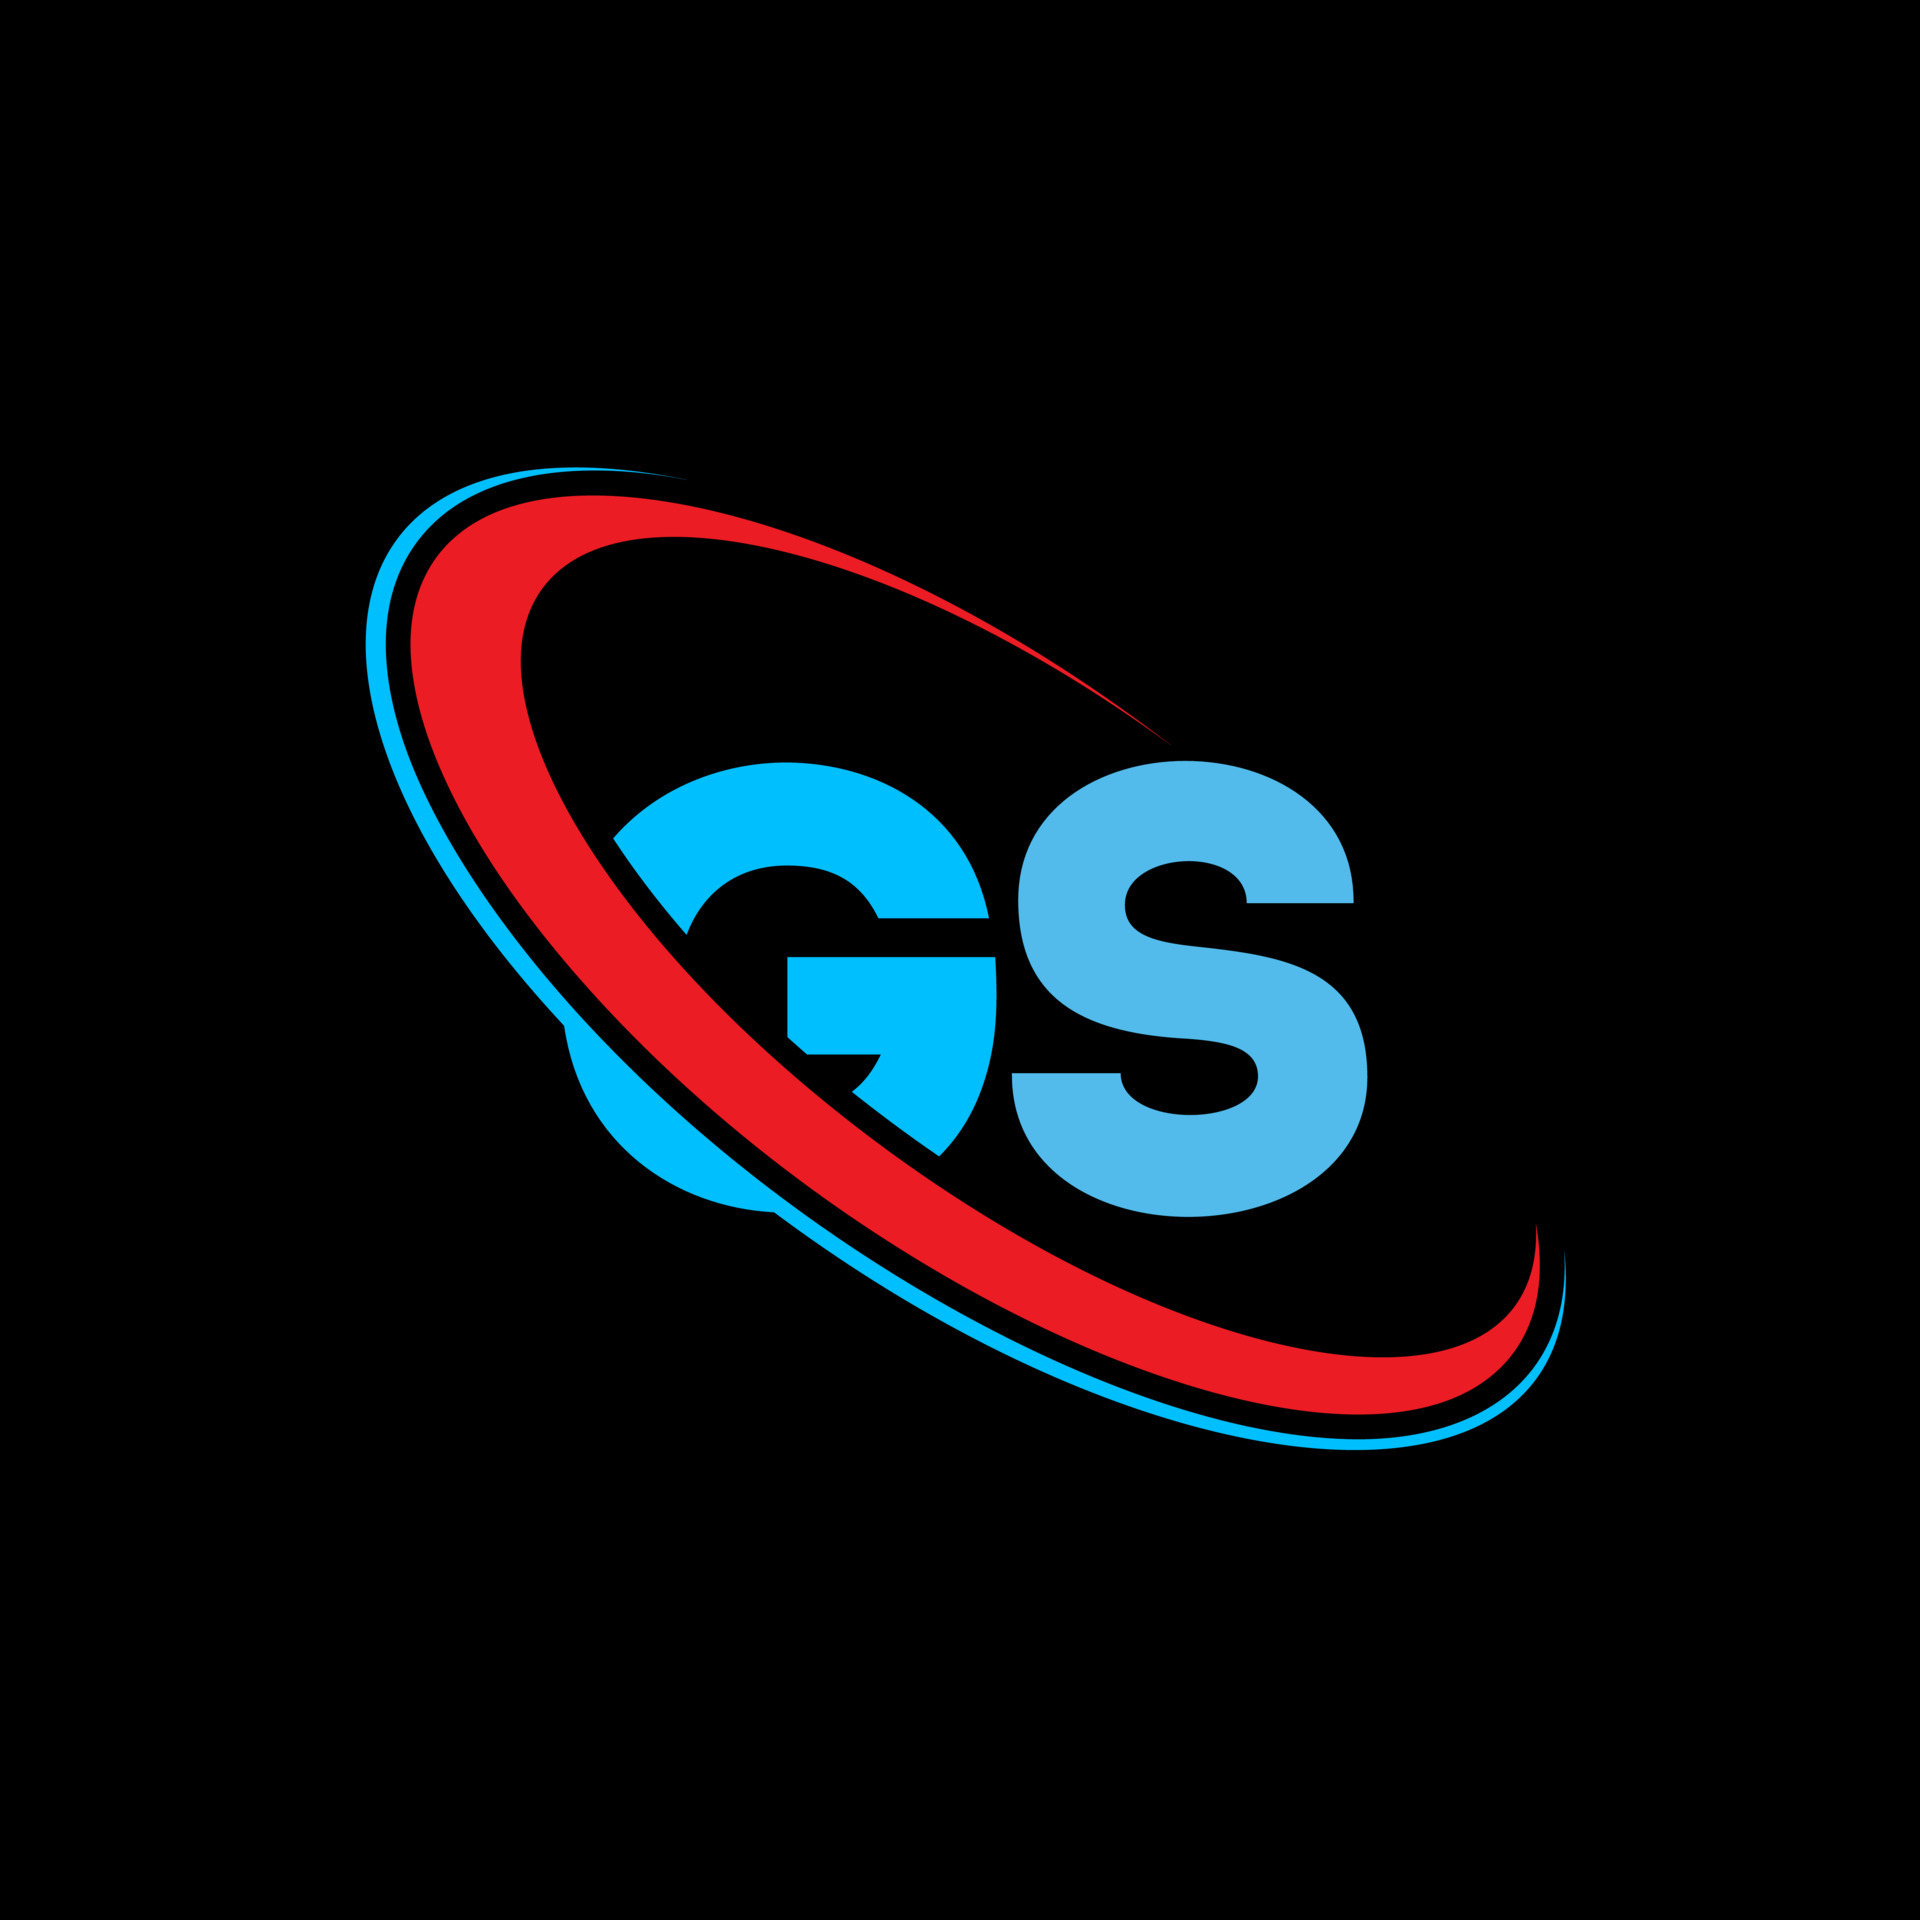 GS Letter logo icon design template elements - stock vector 2536989 |  Crushpixel